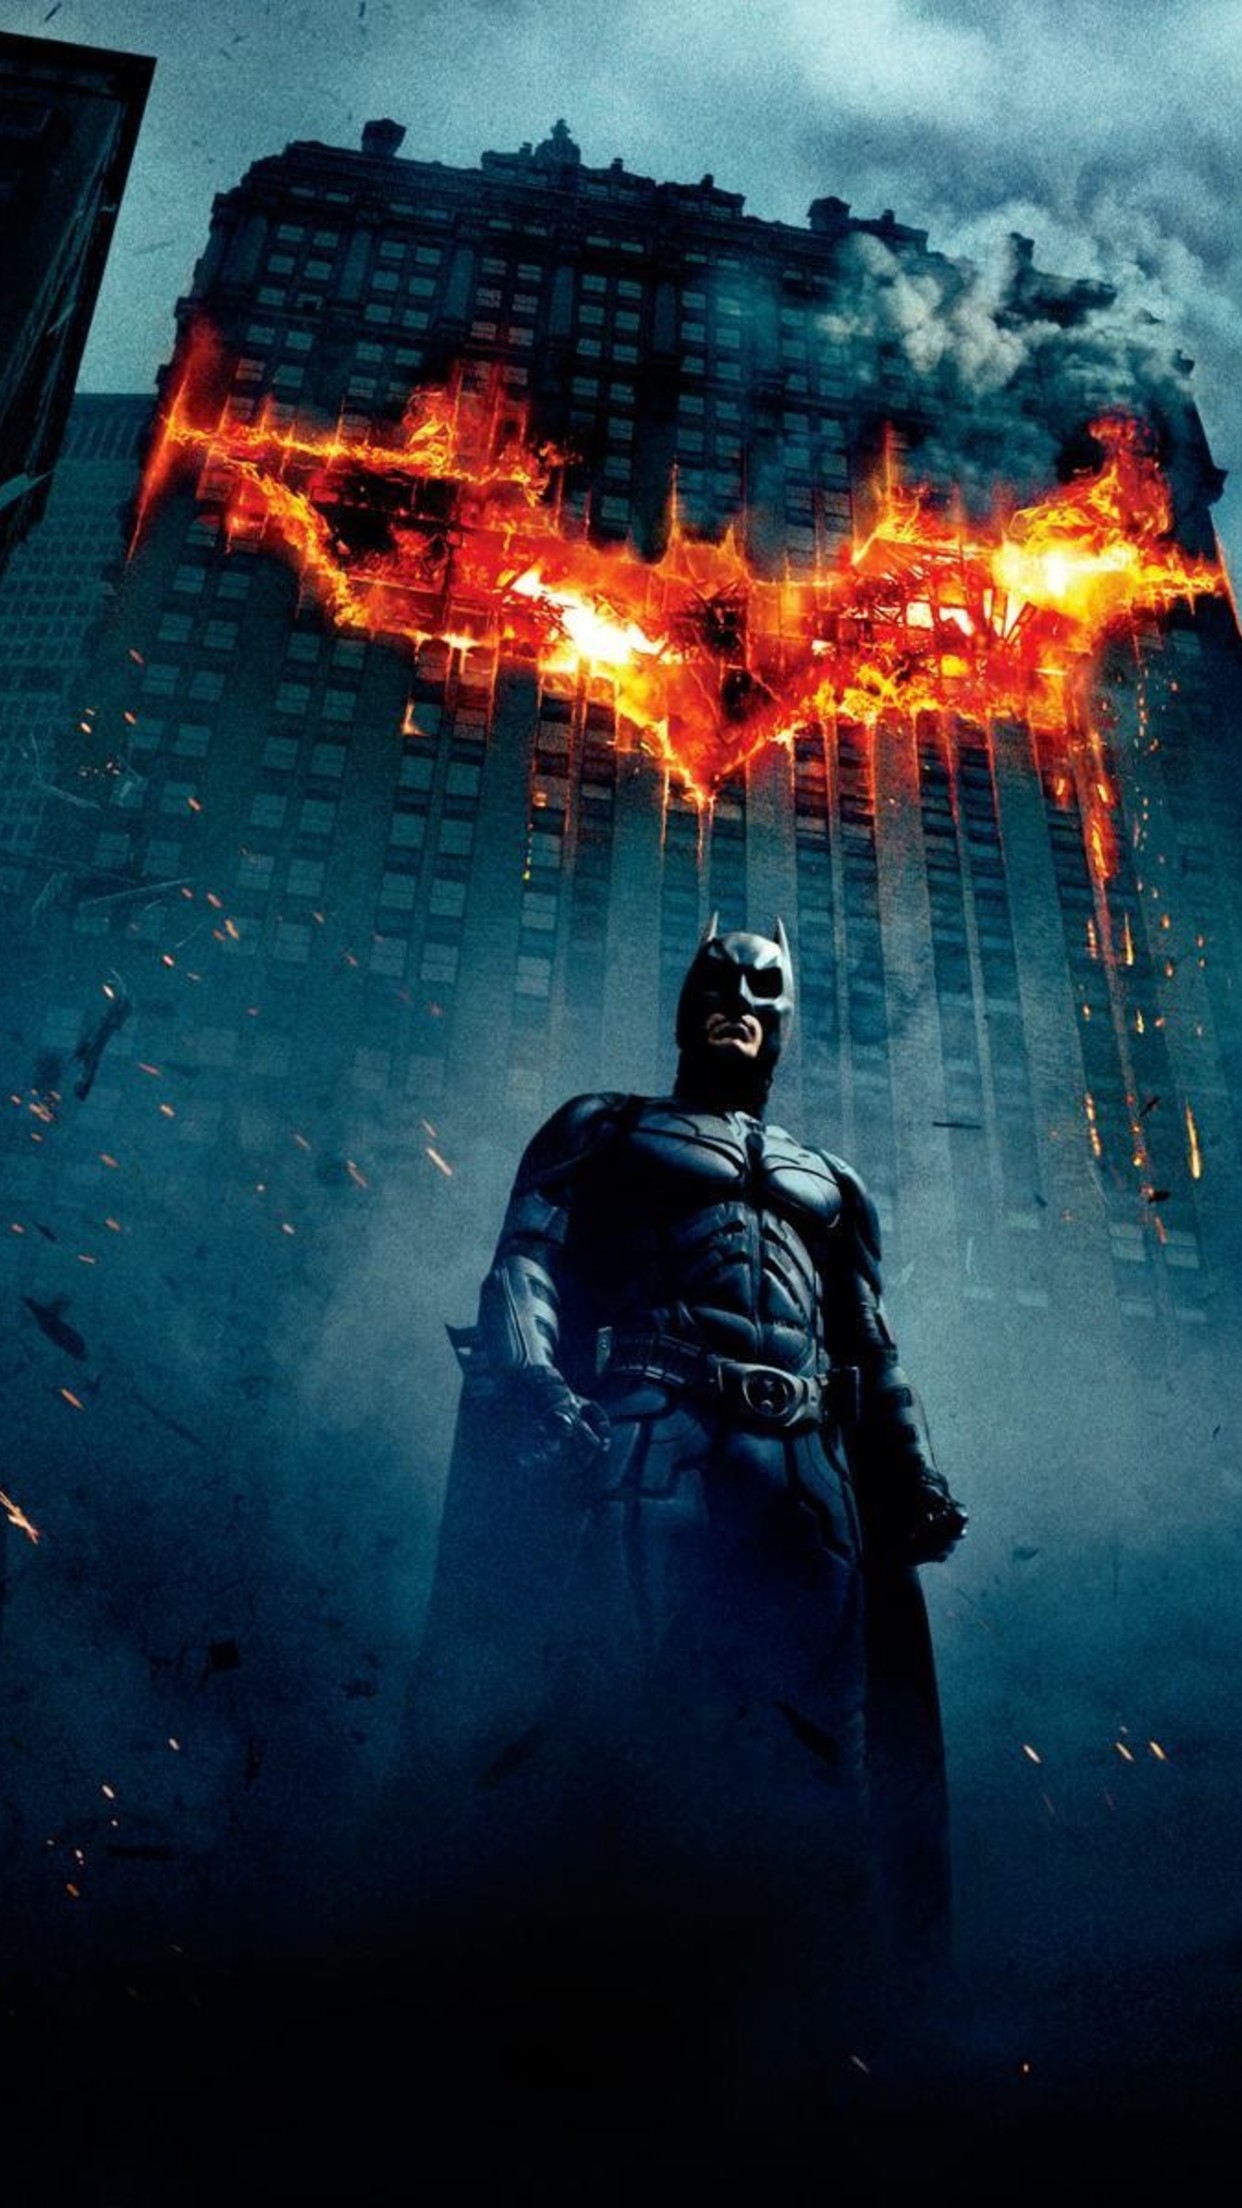 batman wallpaper for iphone 6,batman,fictional character,superhero,movie,justice league